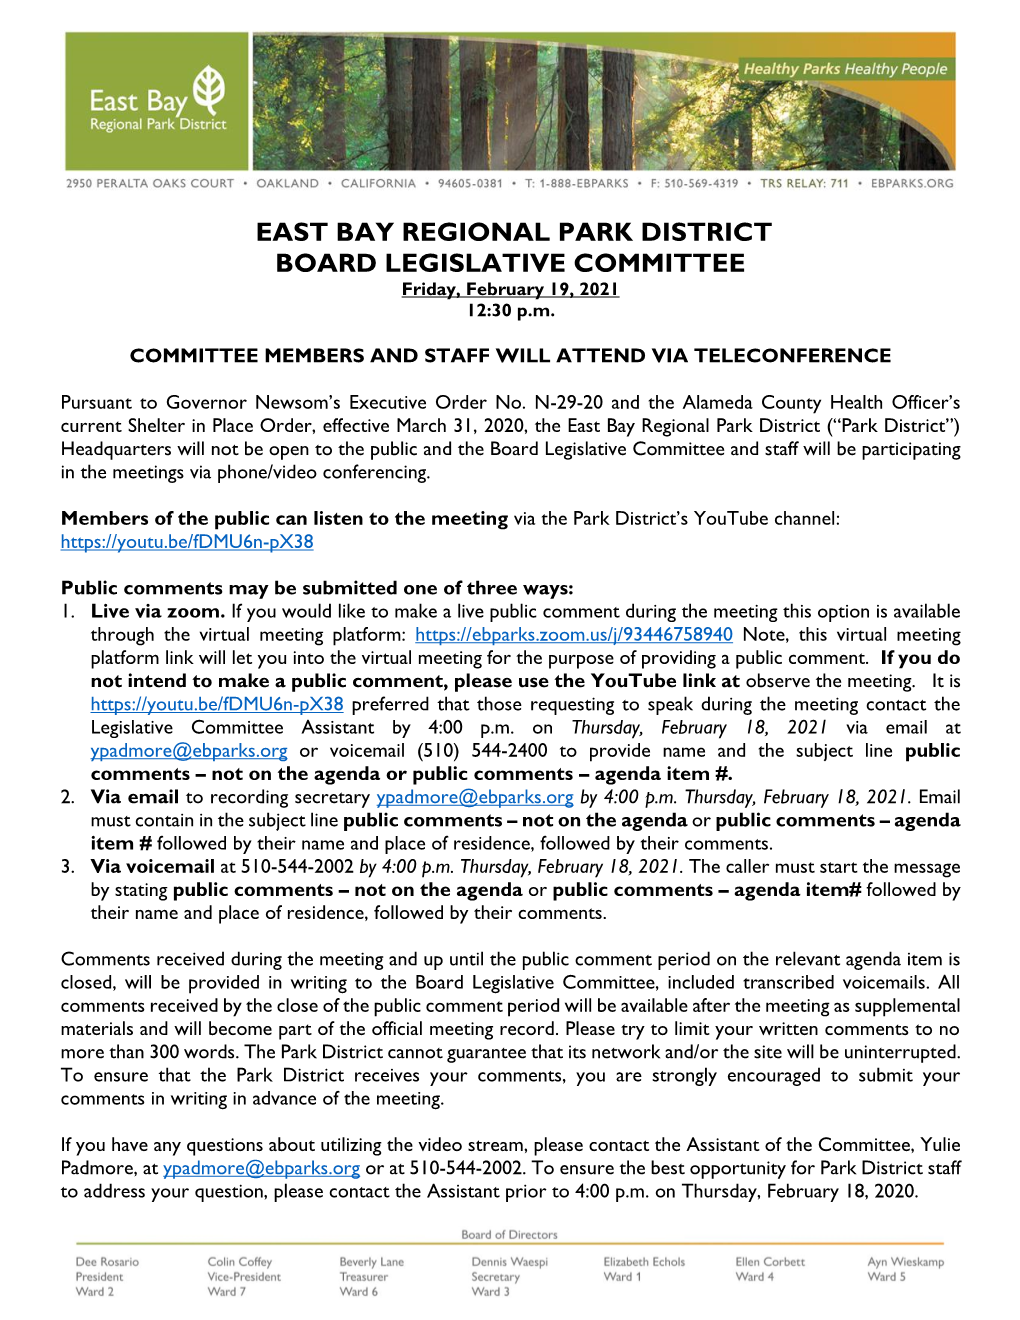 EAST BAY REGIONAL PARK DISTRICT BOARD LEGISLATIVE COMMITTEE Friday, February 19, 2021 12:30 P.M